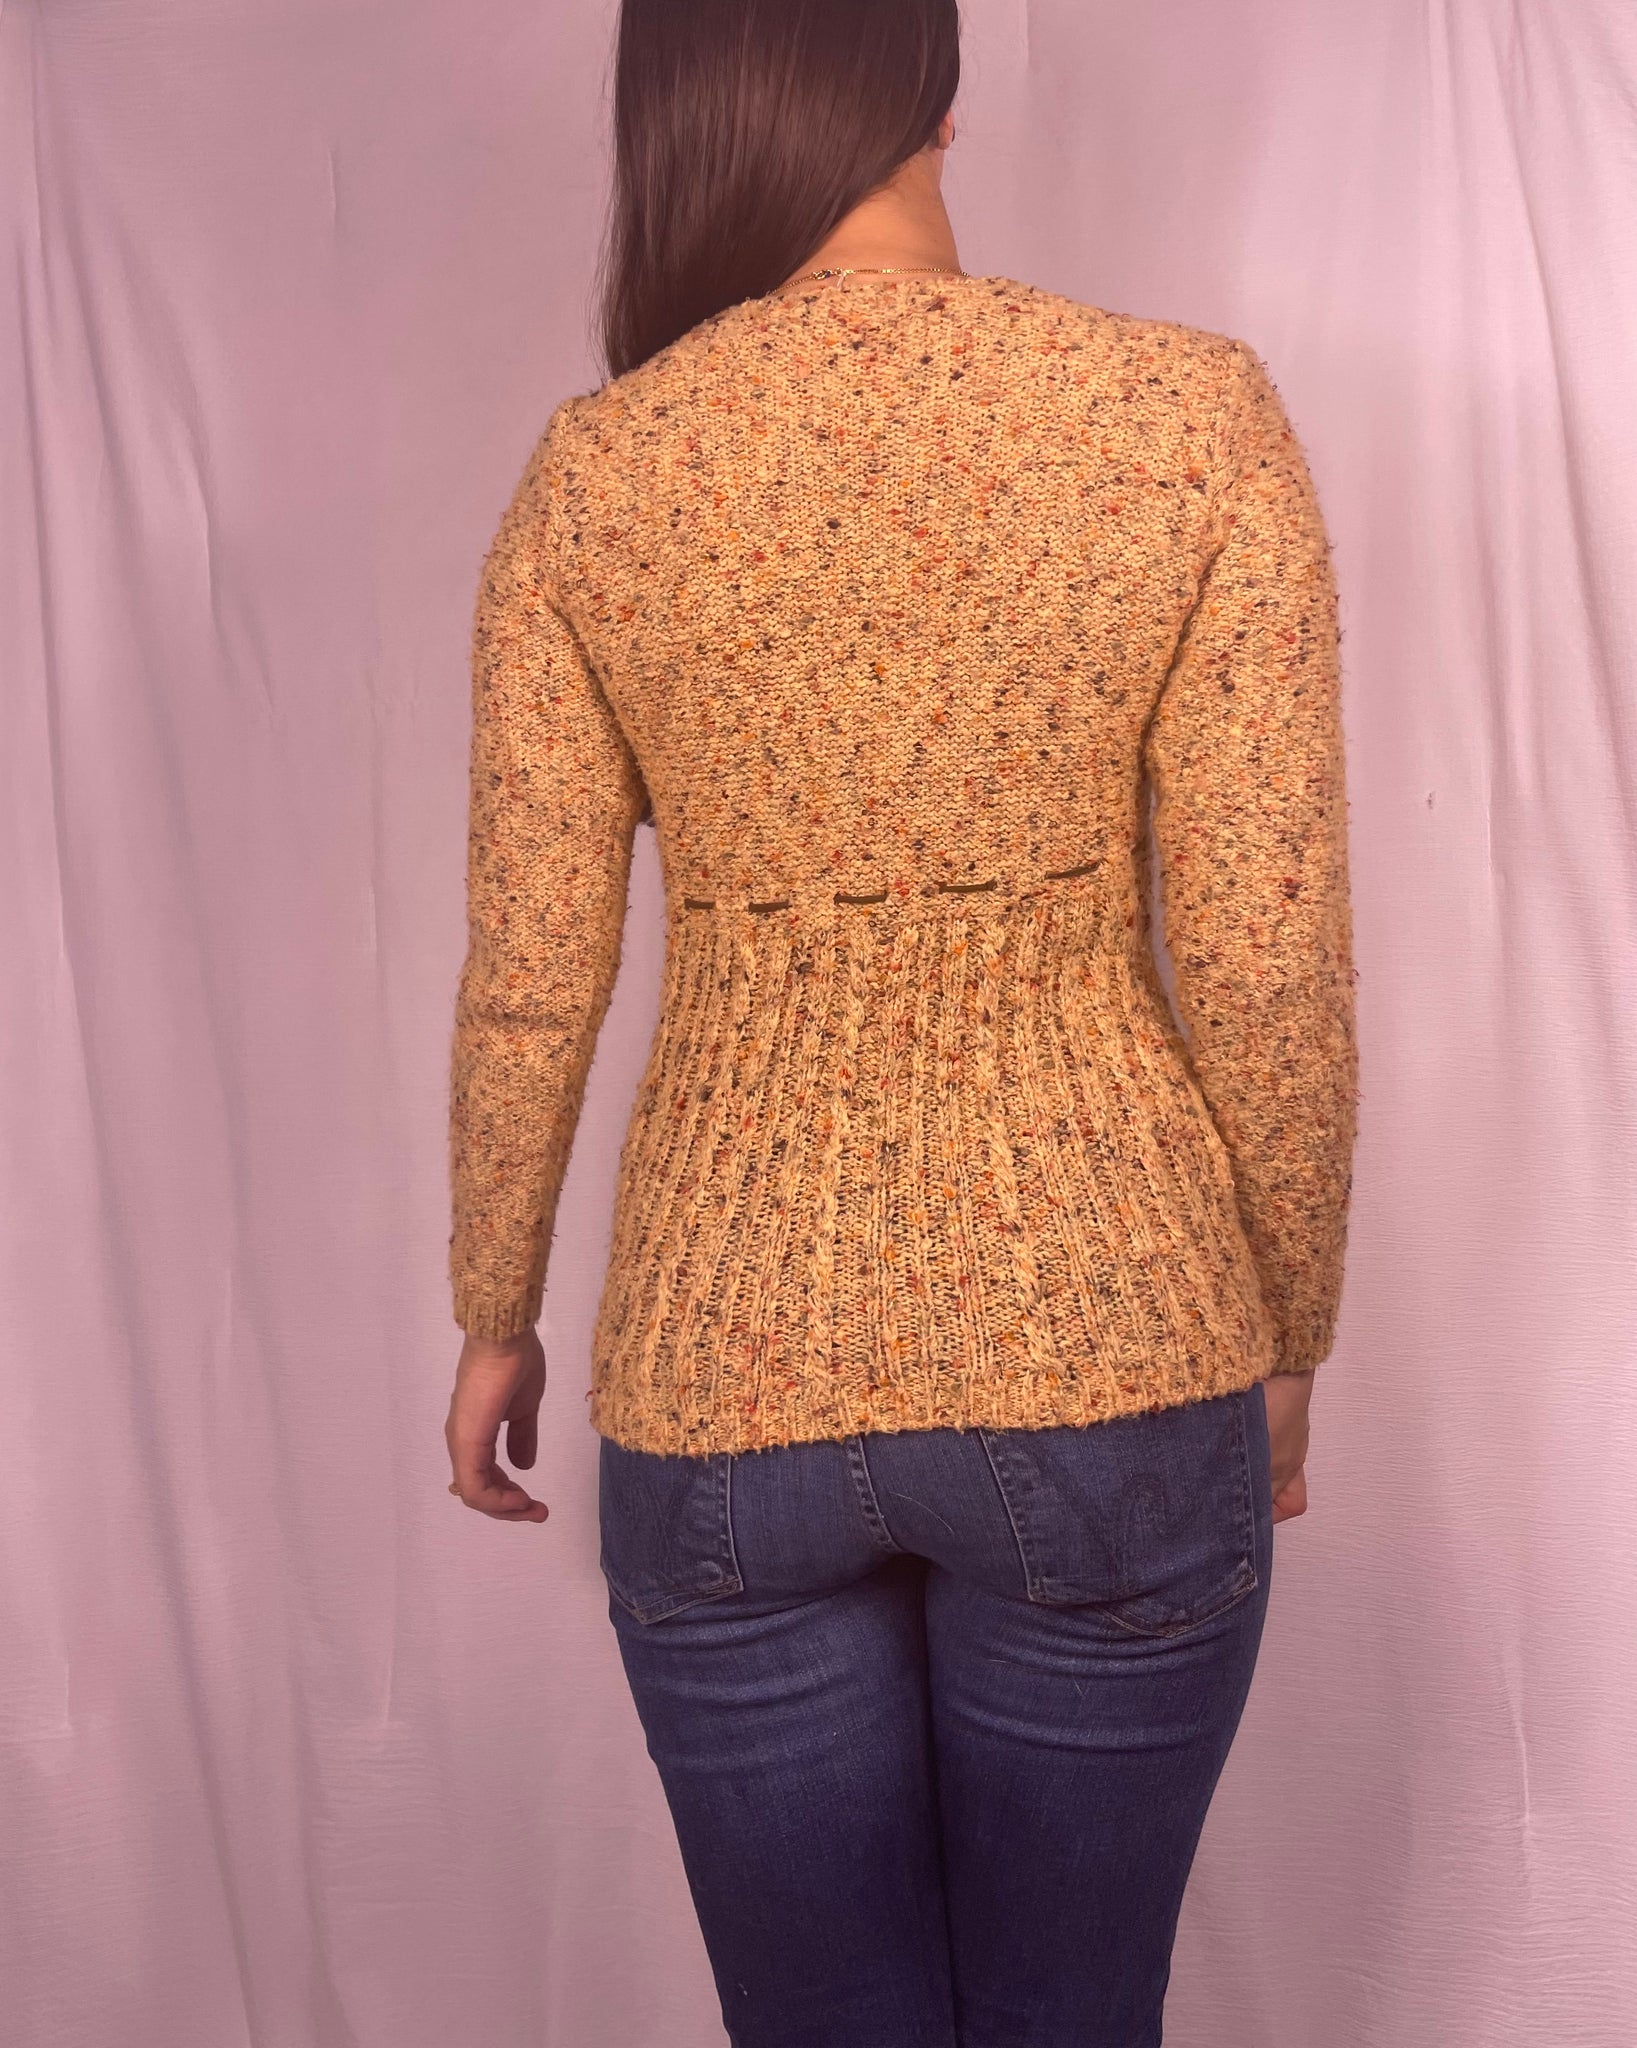 Marled yellow sweater, Size L